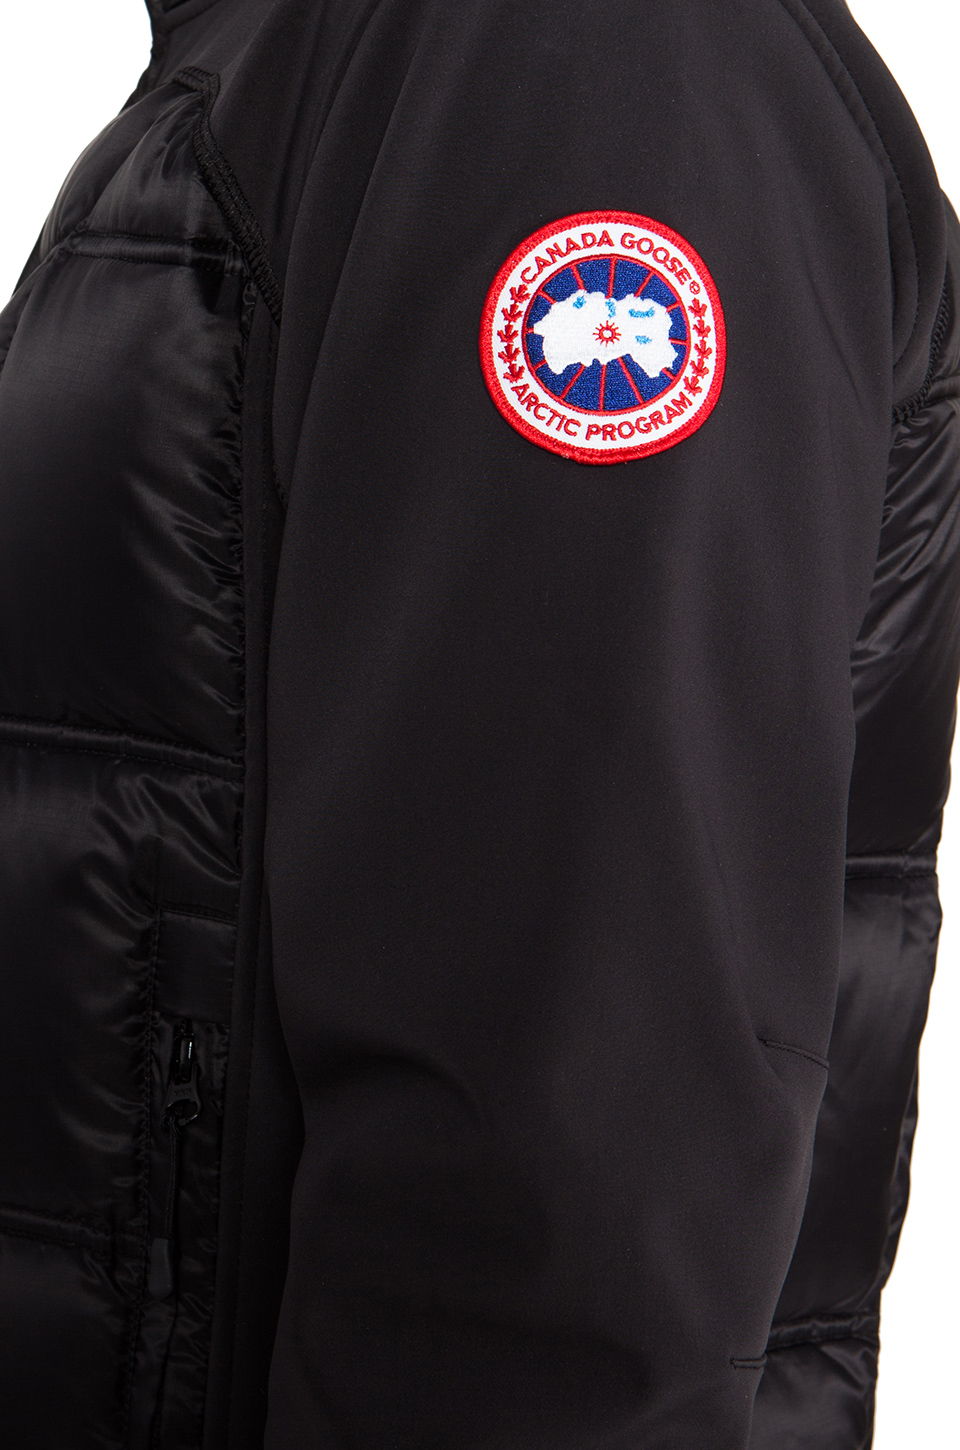 Canada Goose Hybridge Jacket in Black for Men - Lyst